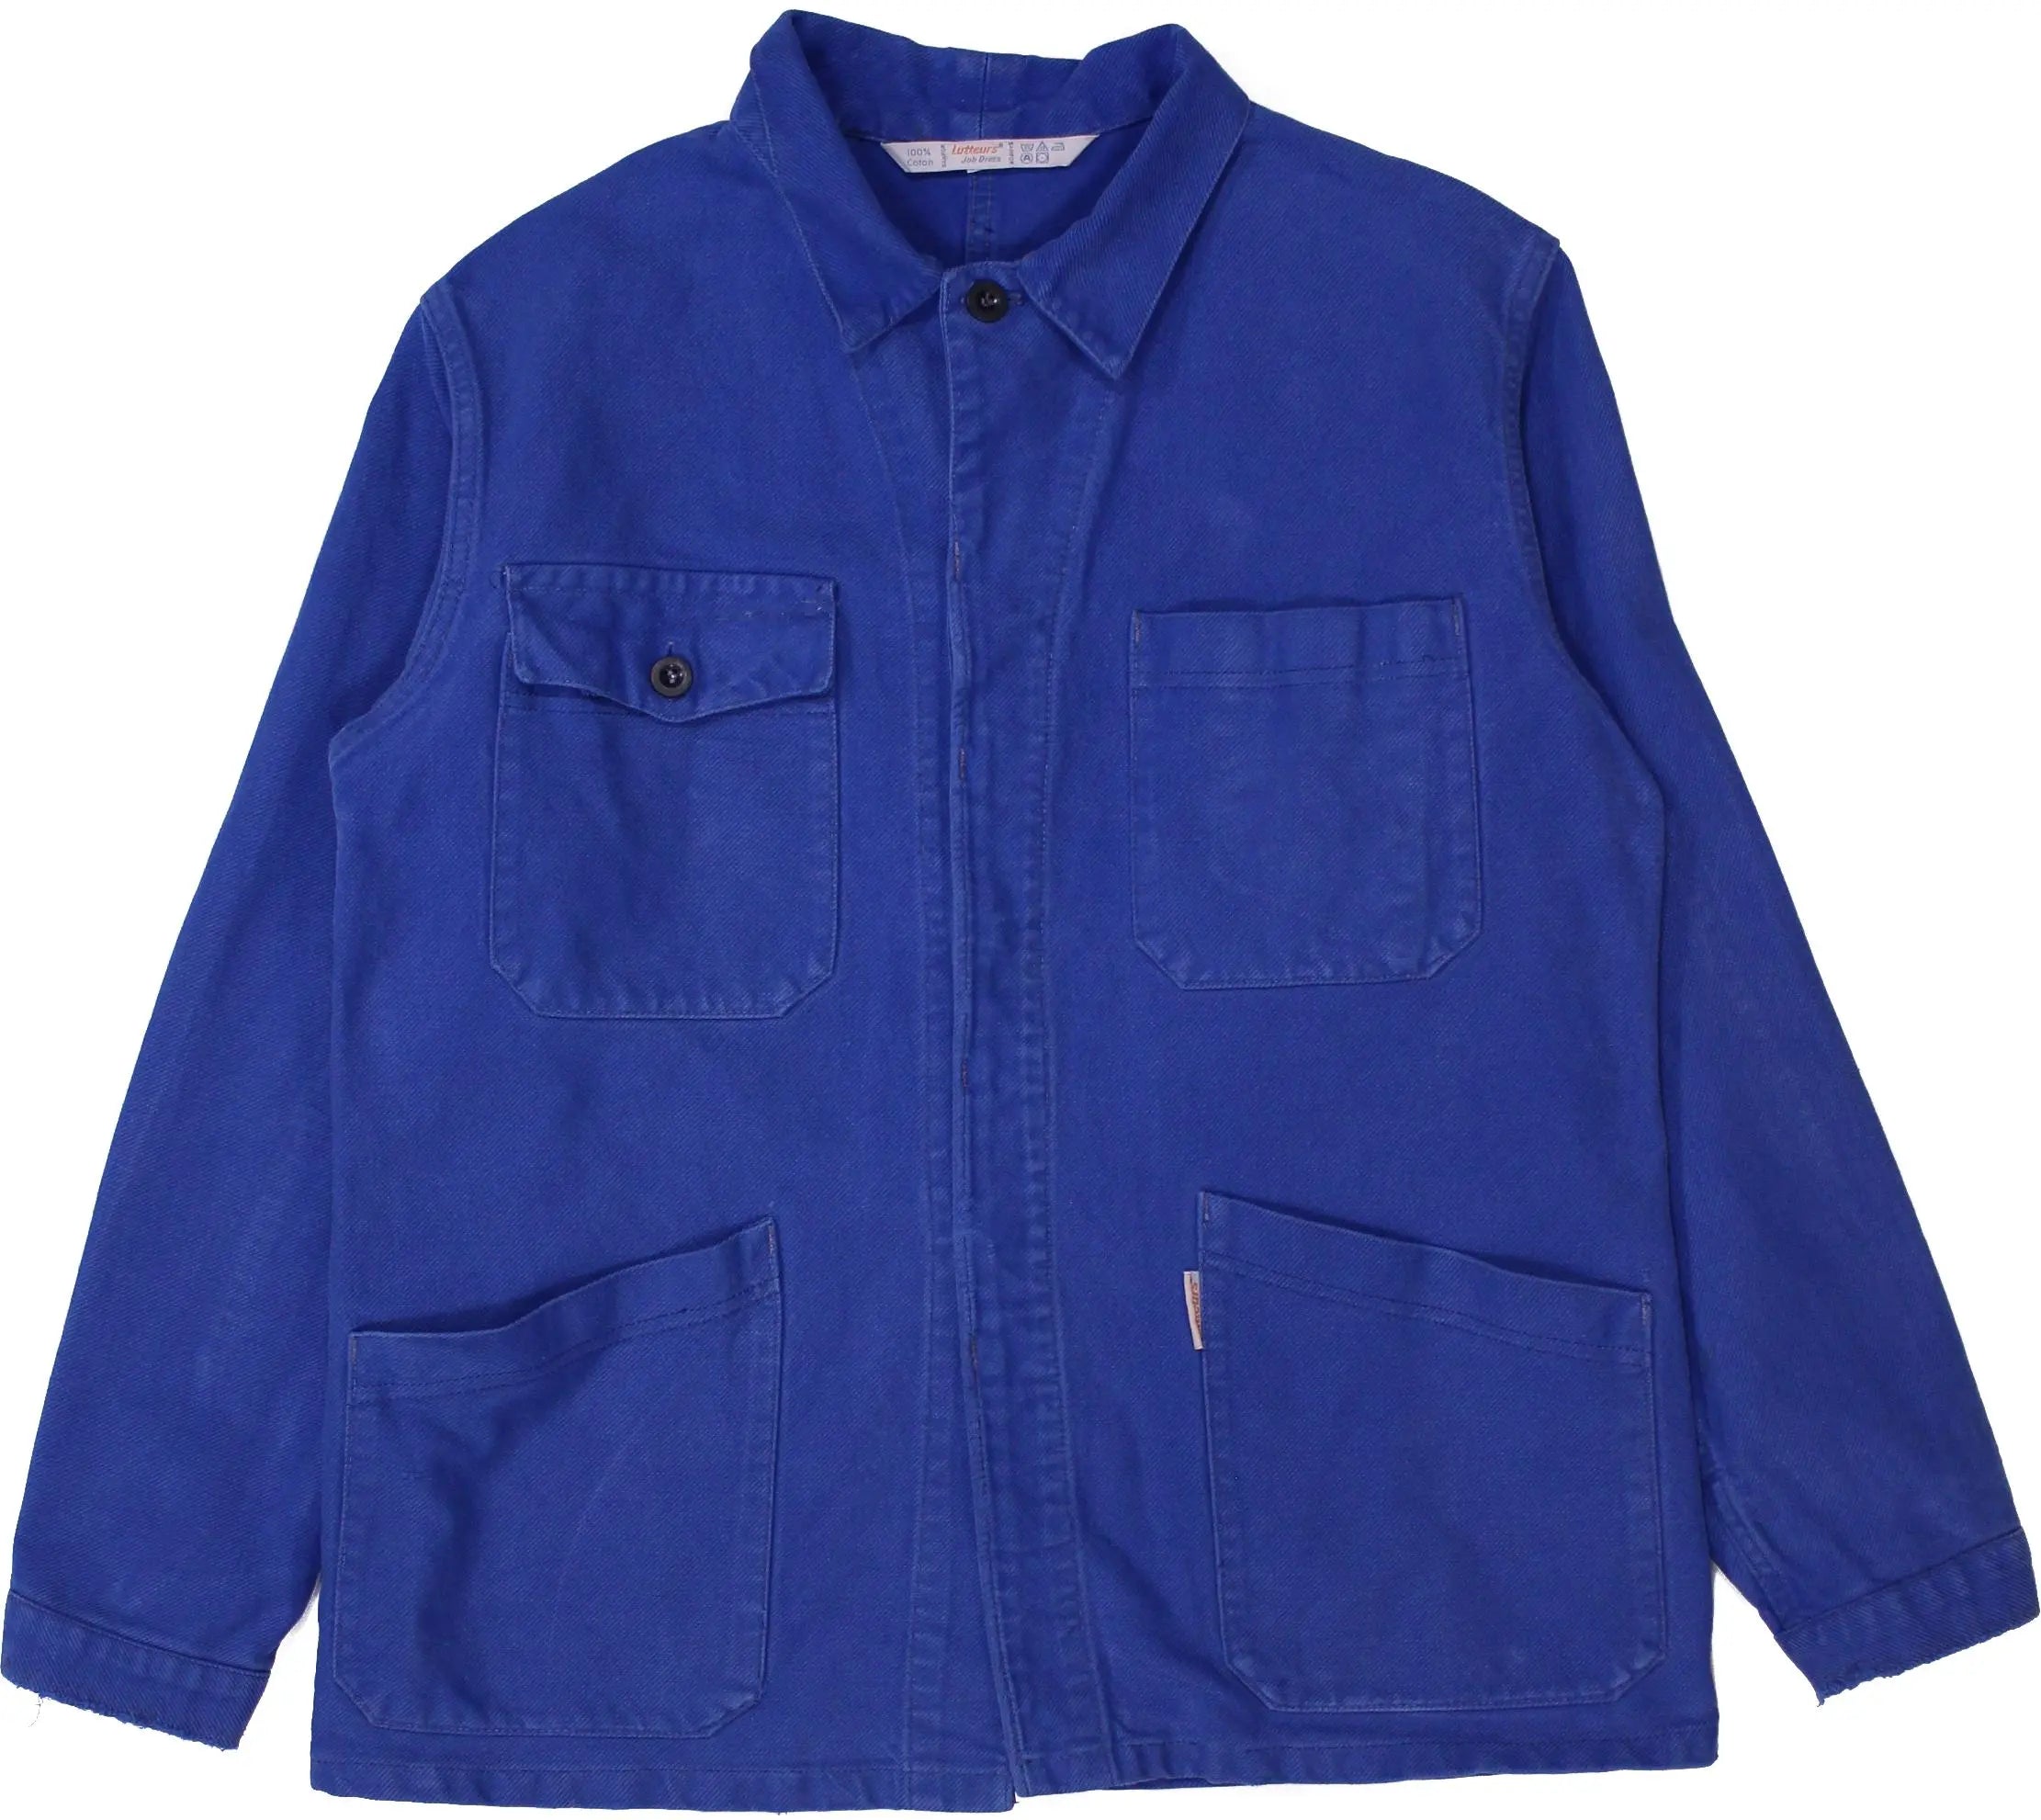 Lutteurs - Vintage Workwear Jacket- ThriftTale.com - Vintage and second handclothing